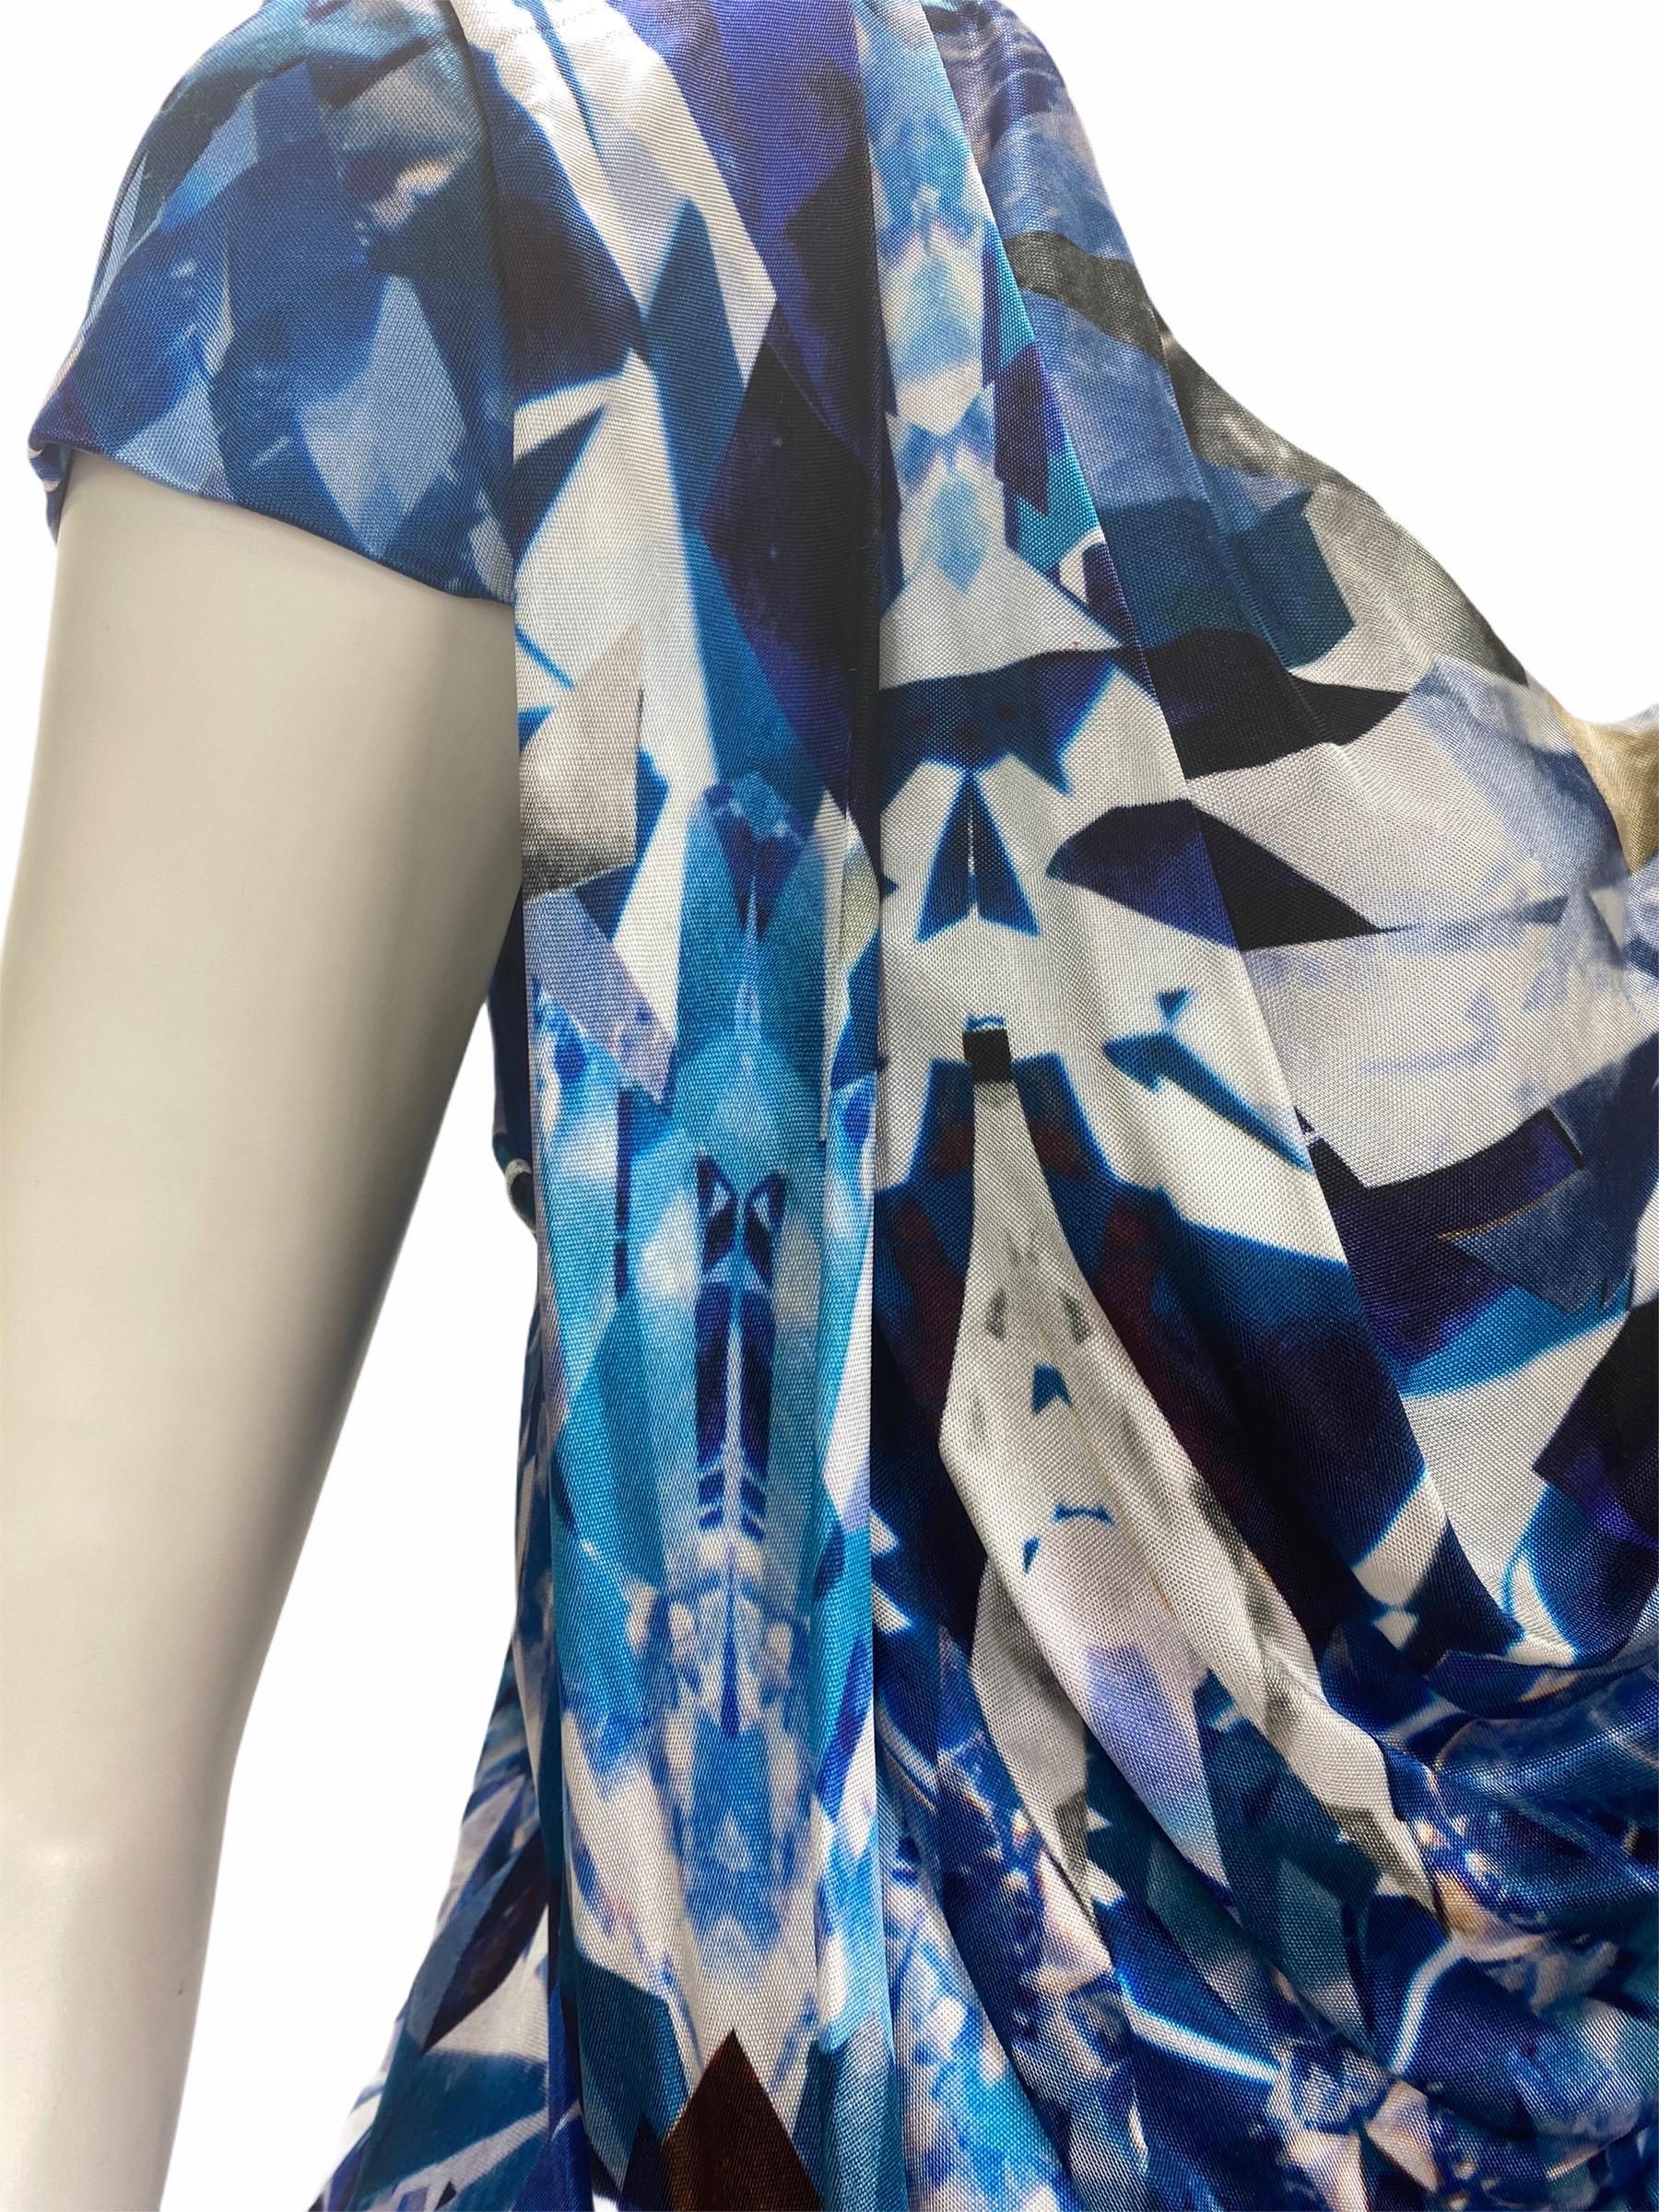 Vintage Alexander McQueen Kaleidoscope Print Tunic Dress  In Excellent Condition For Sale In Montgomery, TX